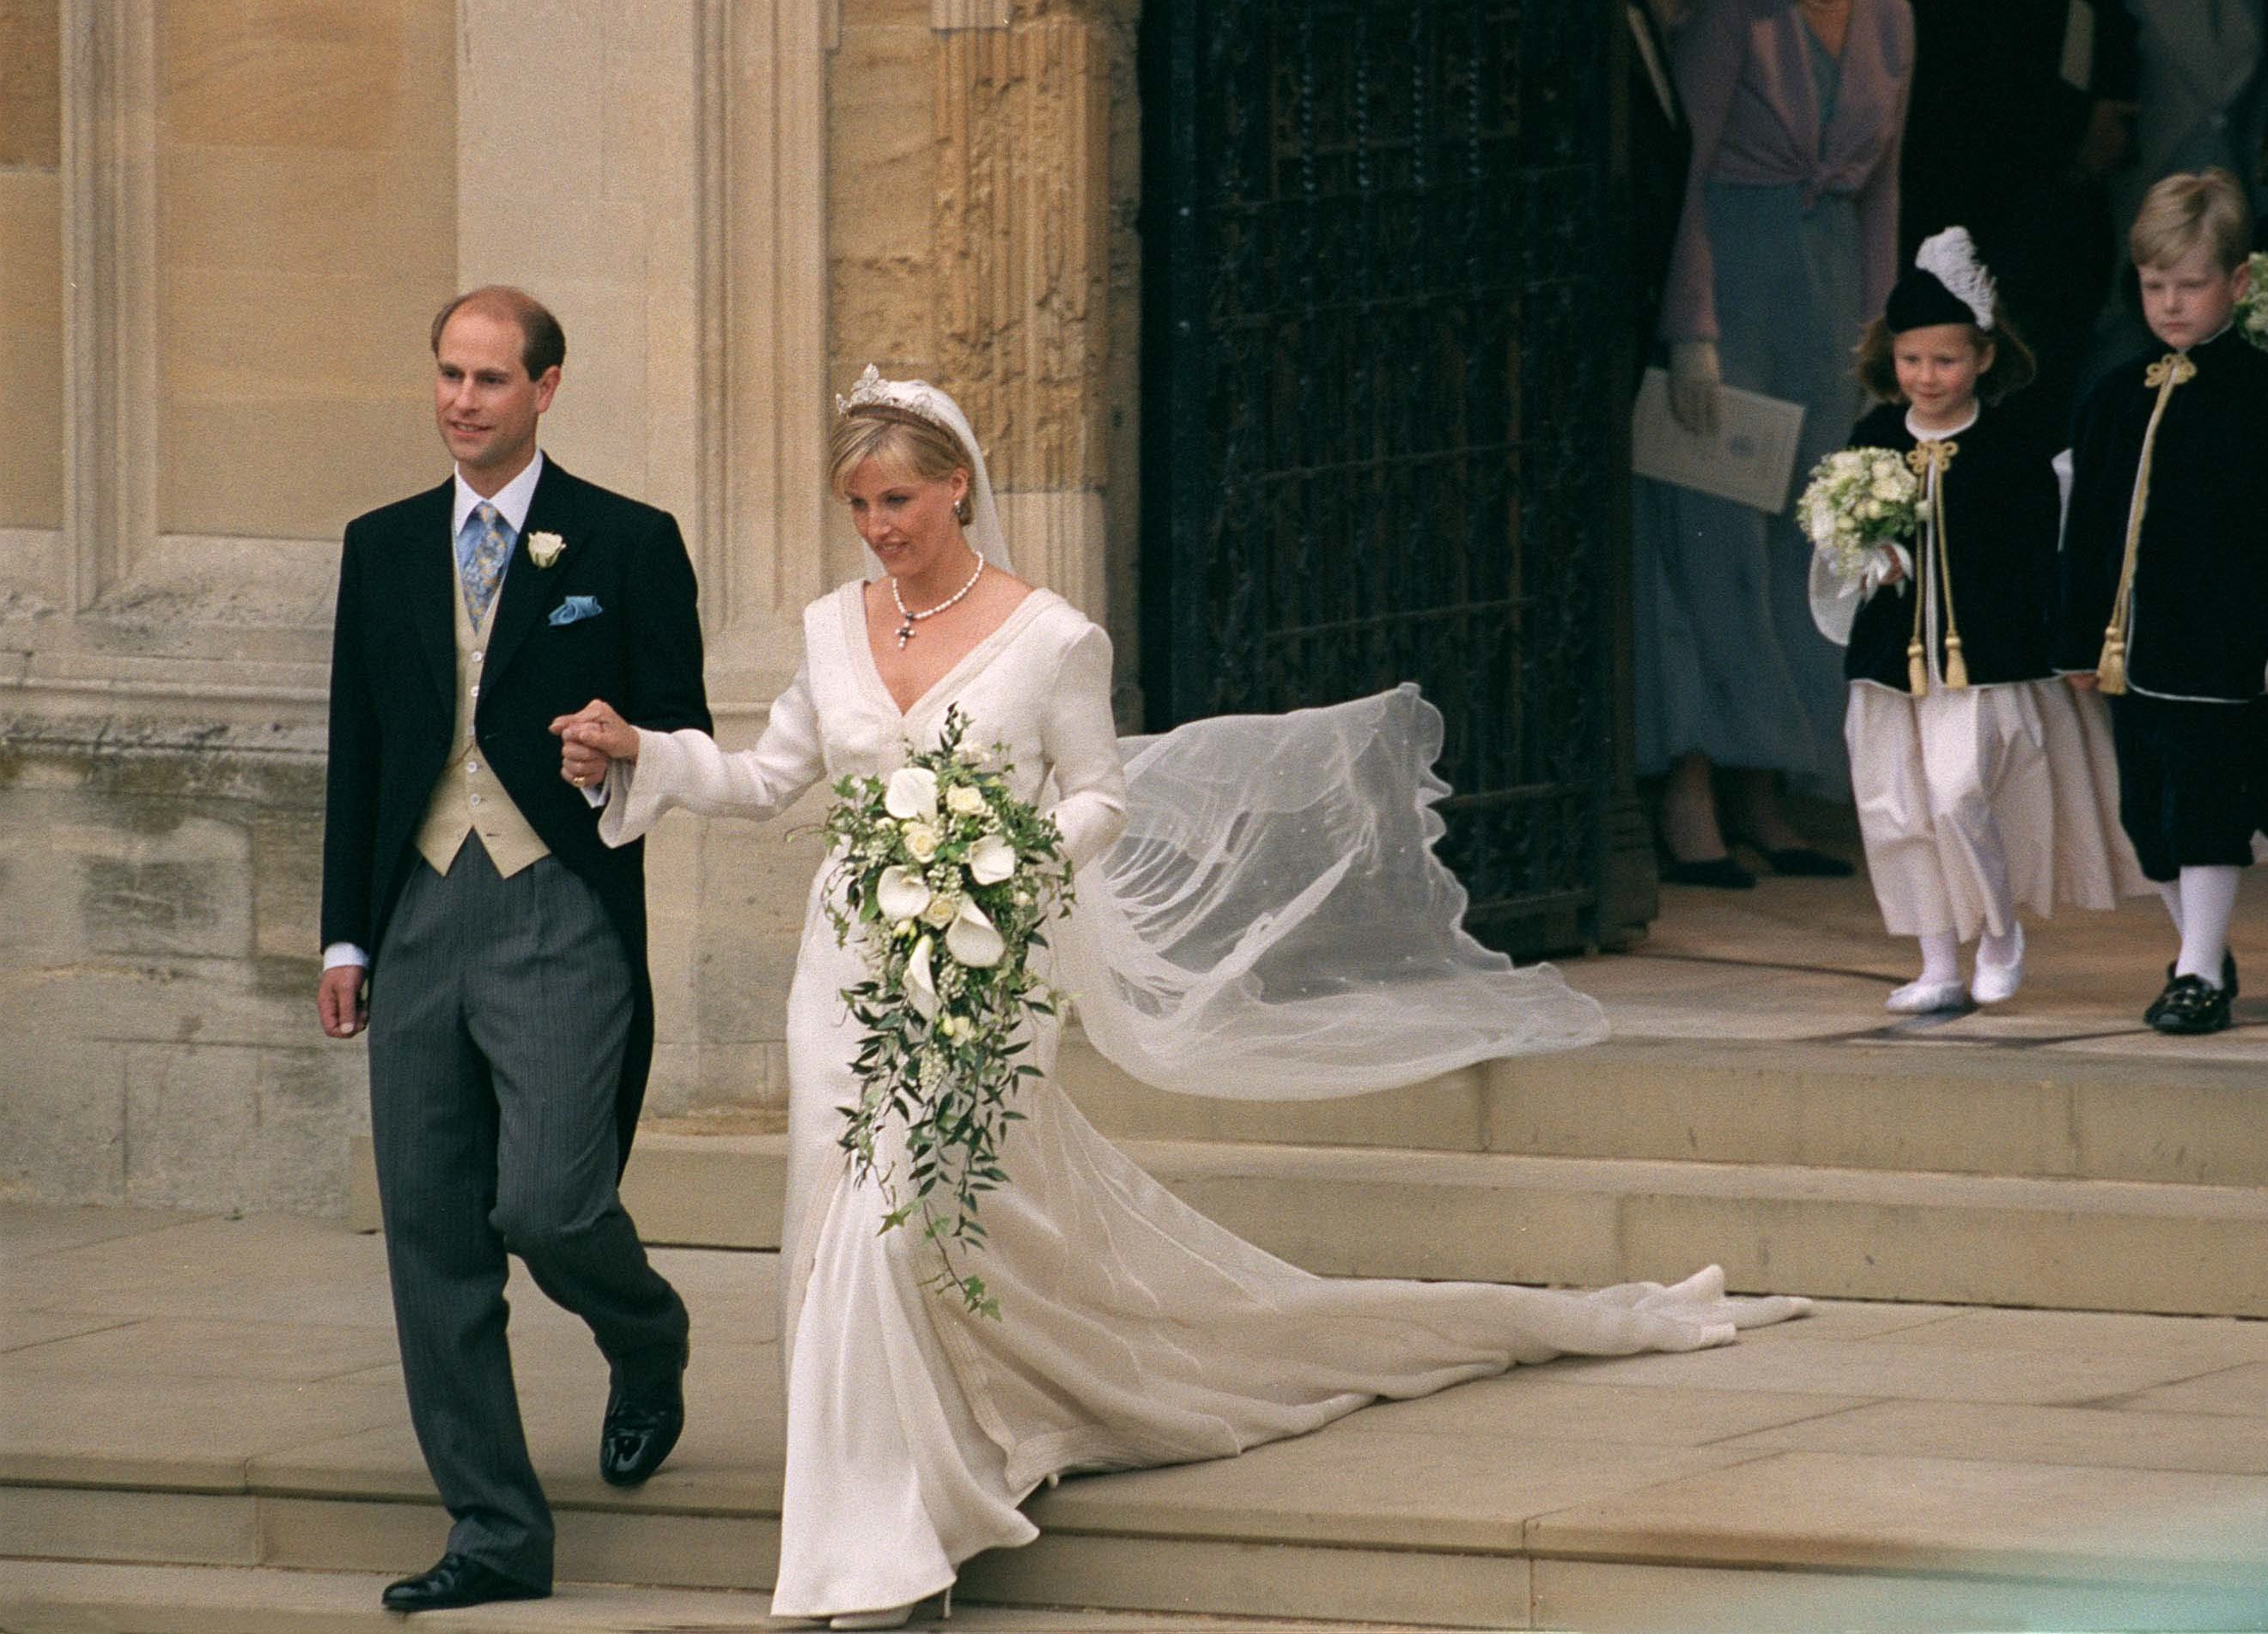 Prince Edward and Sophie Rhys-jones on their wedding day